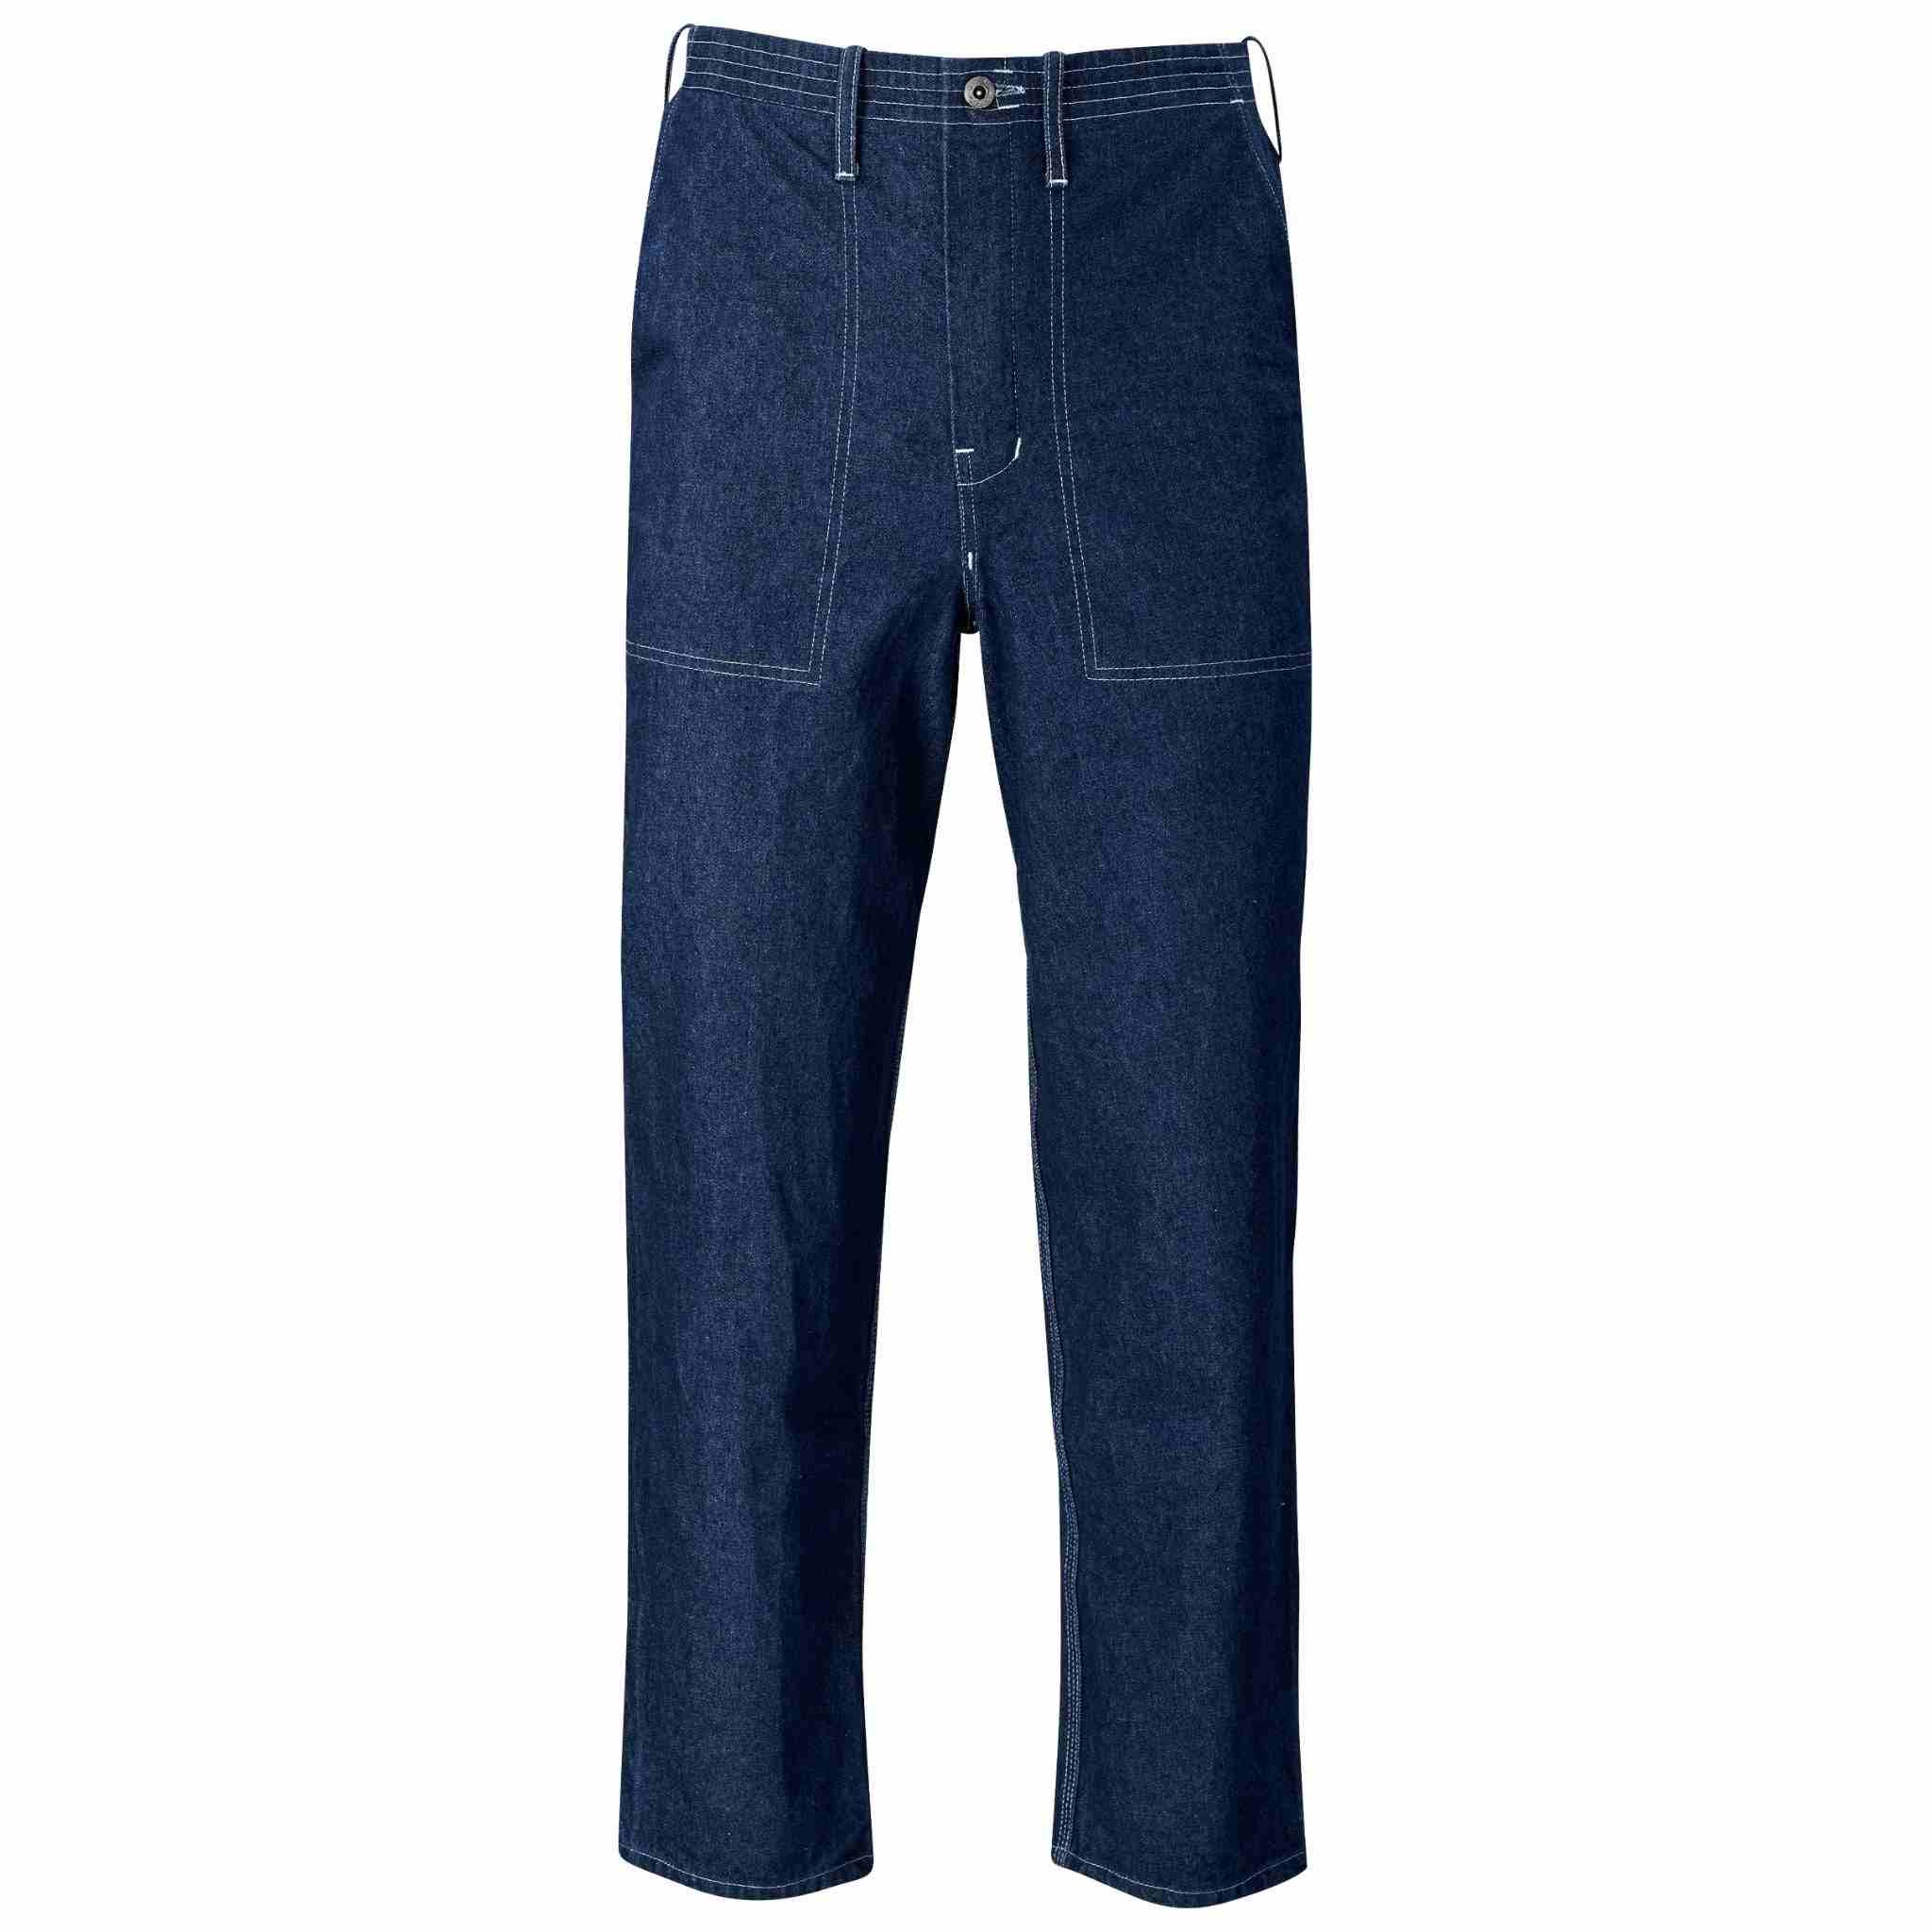 Front View of Blue Denim Jean Trouser Pants